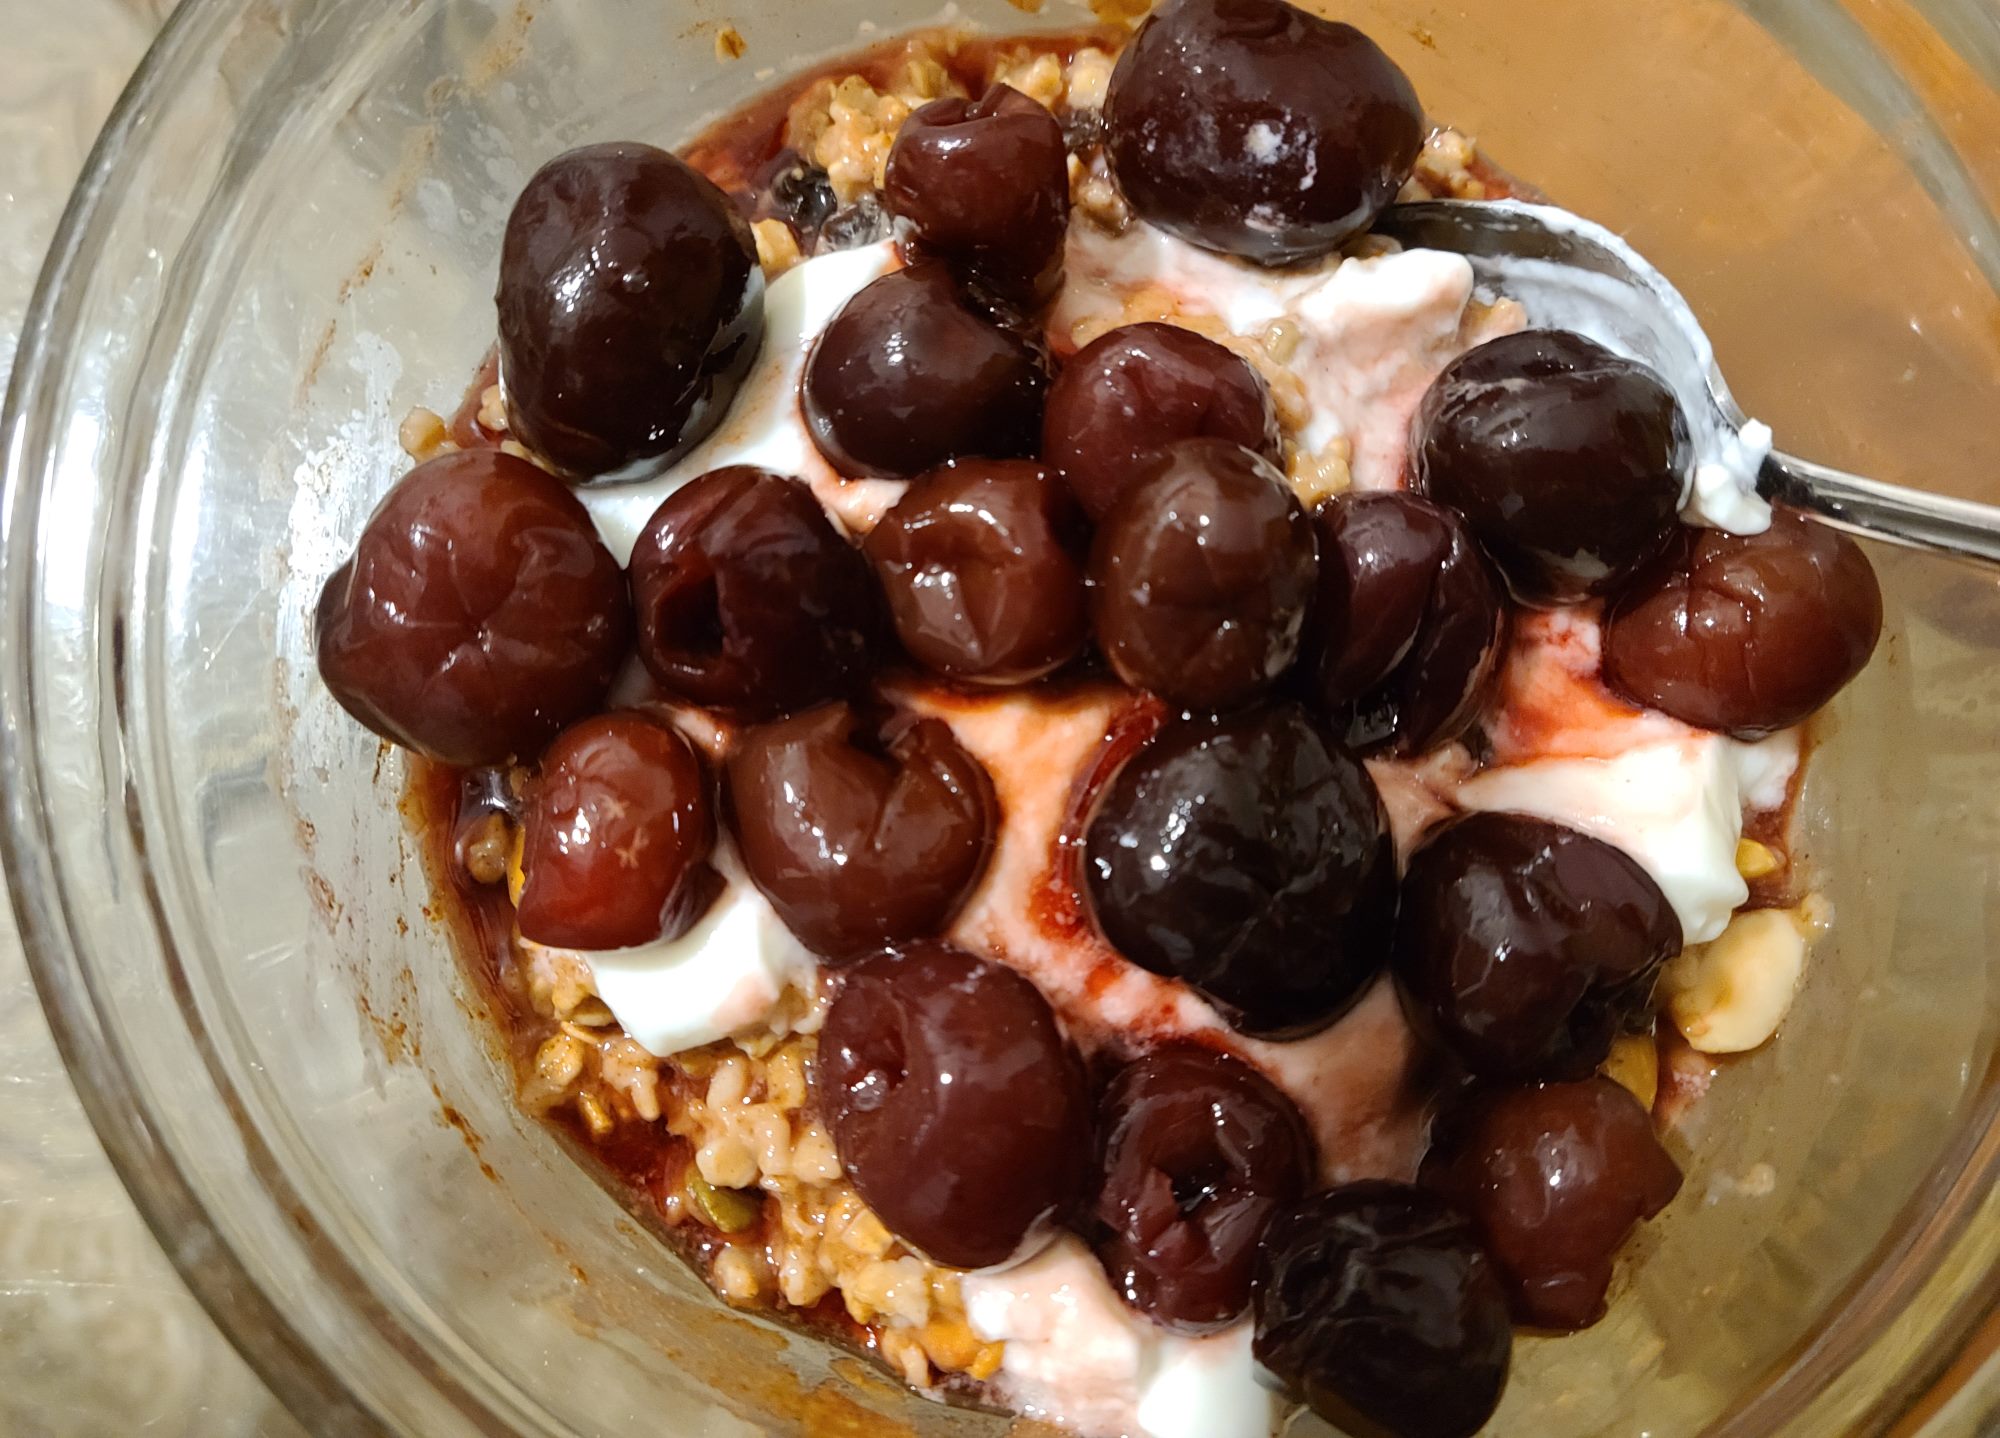 Cherries, probiotic yogurt, oats and nut, seeds mixture oatmeal breakfast